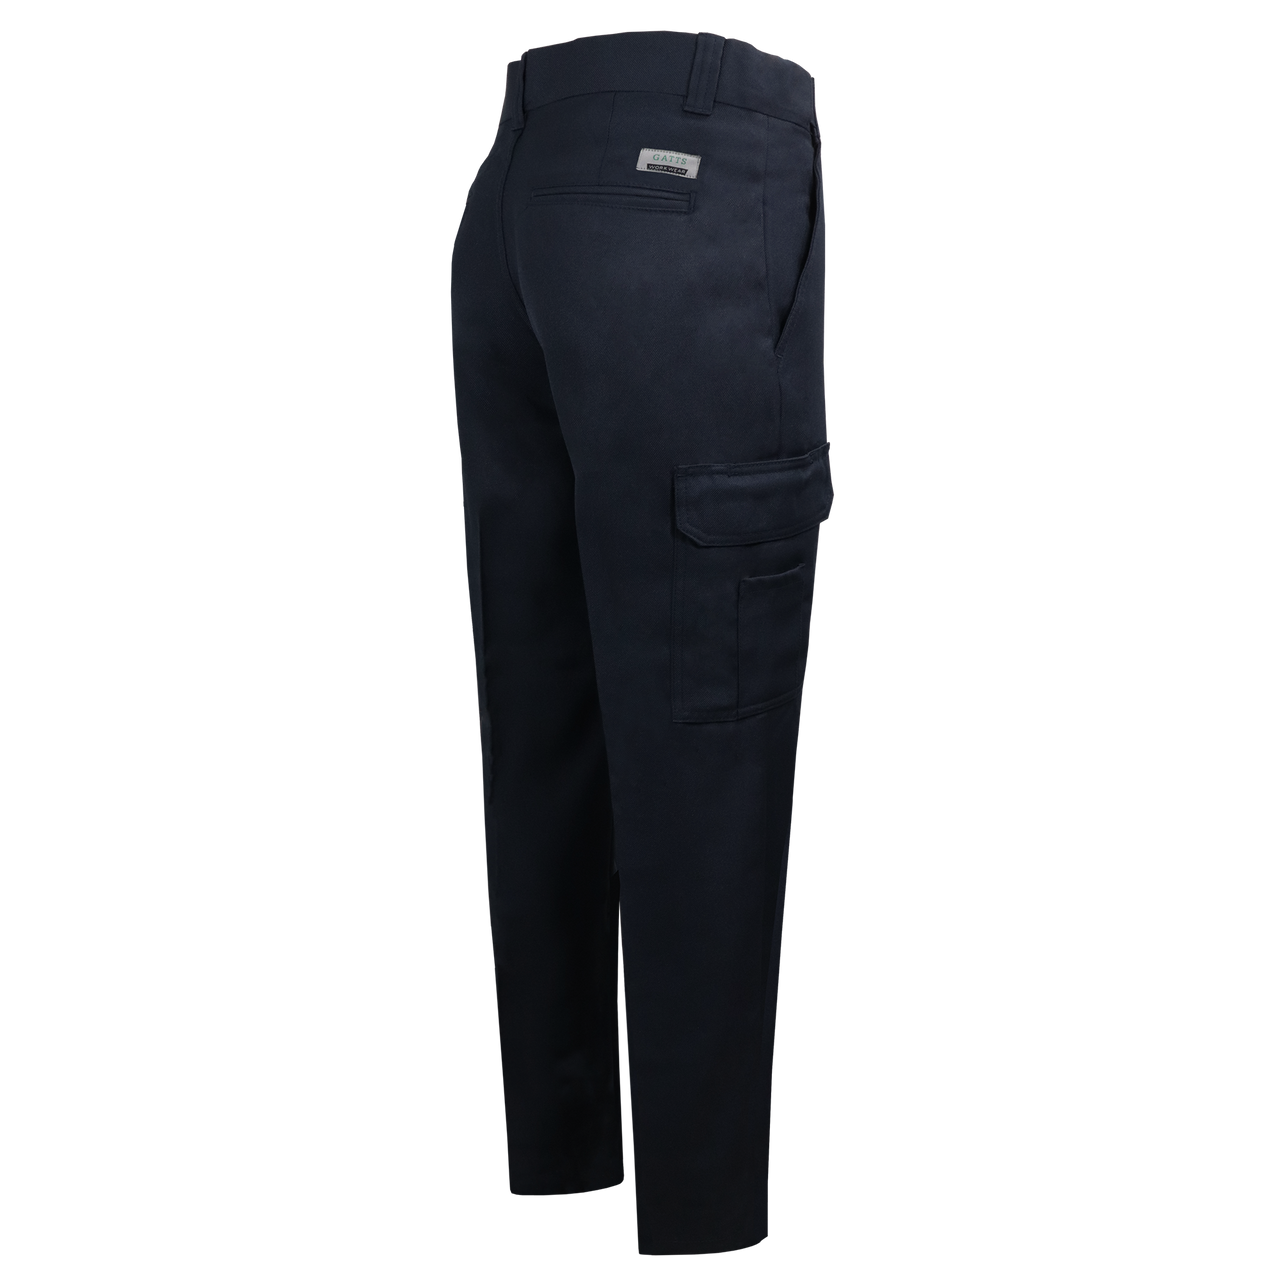 MG-011 Pantalon d'uniforme Cargo (taille flexible)||MG-011 Uniform Cargo pant (flexible waist)